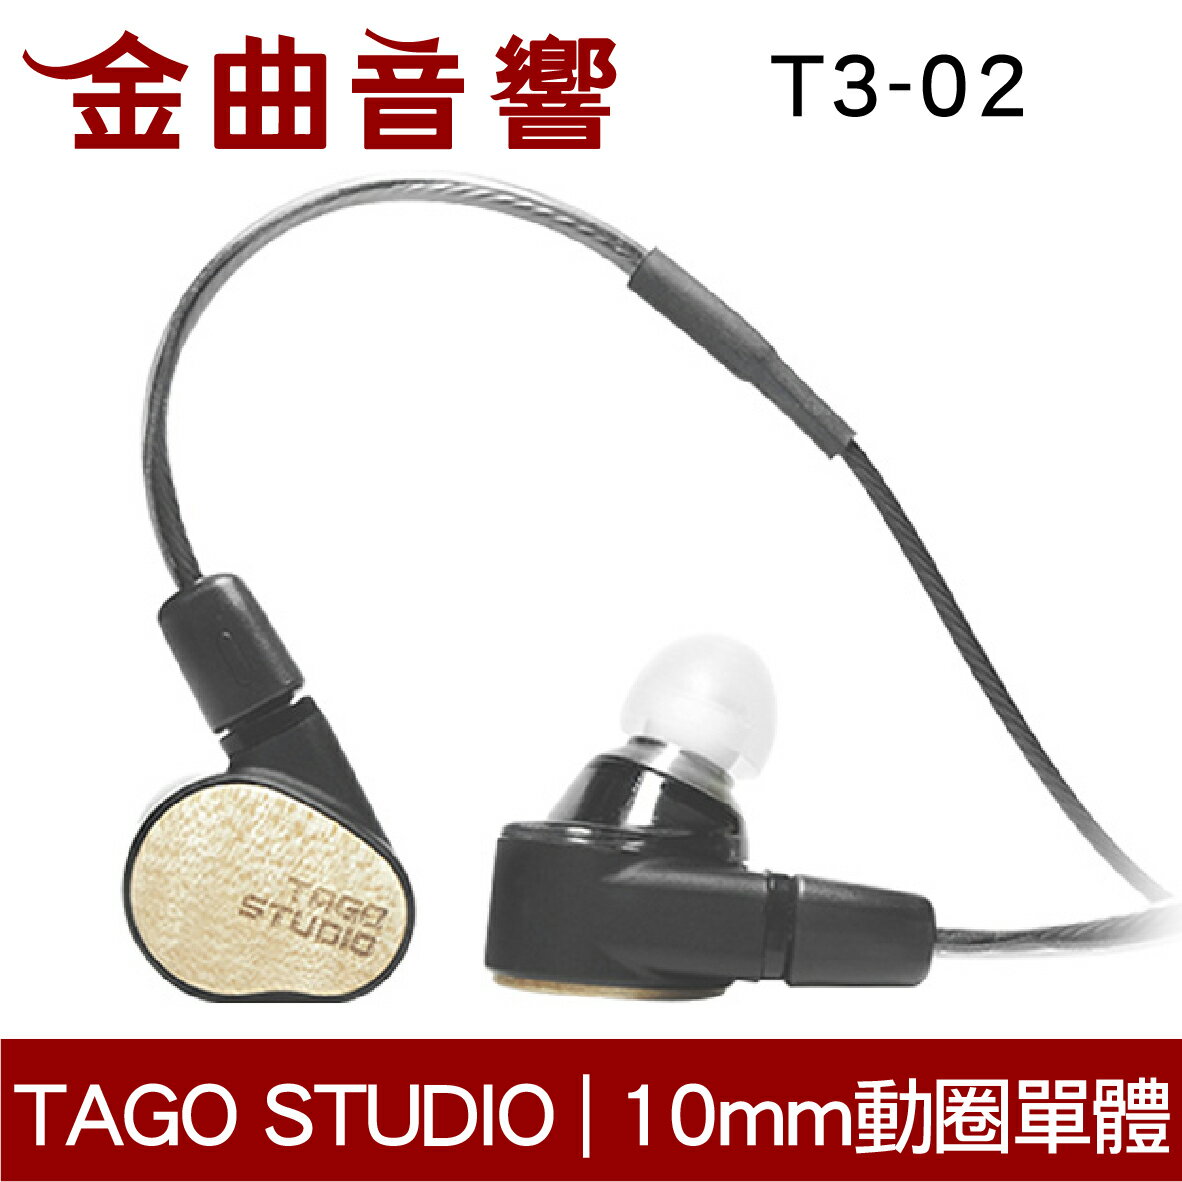 TAGO STUDIO T3-02 日本楓木外殼專業監聽耳機入耳式耳機| 金曲音響